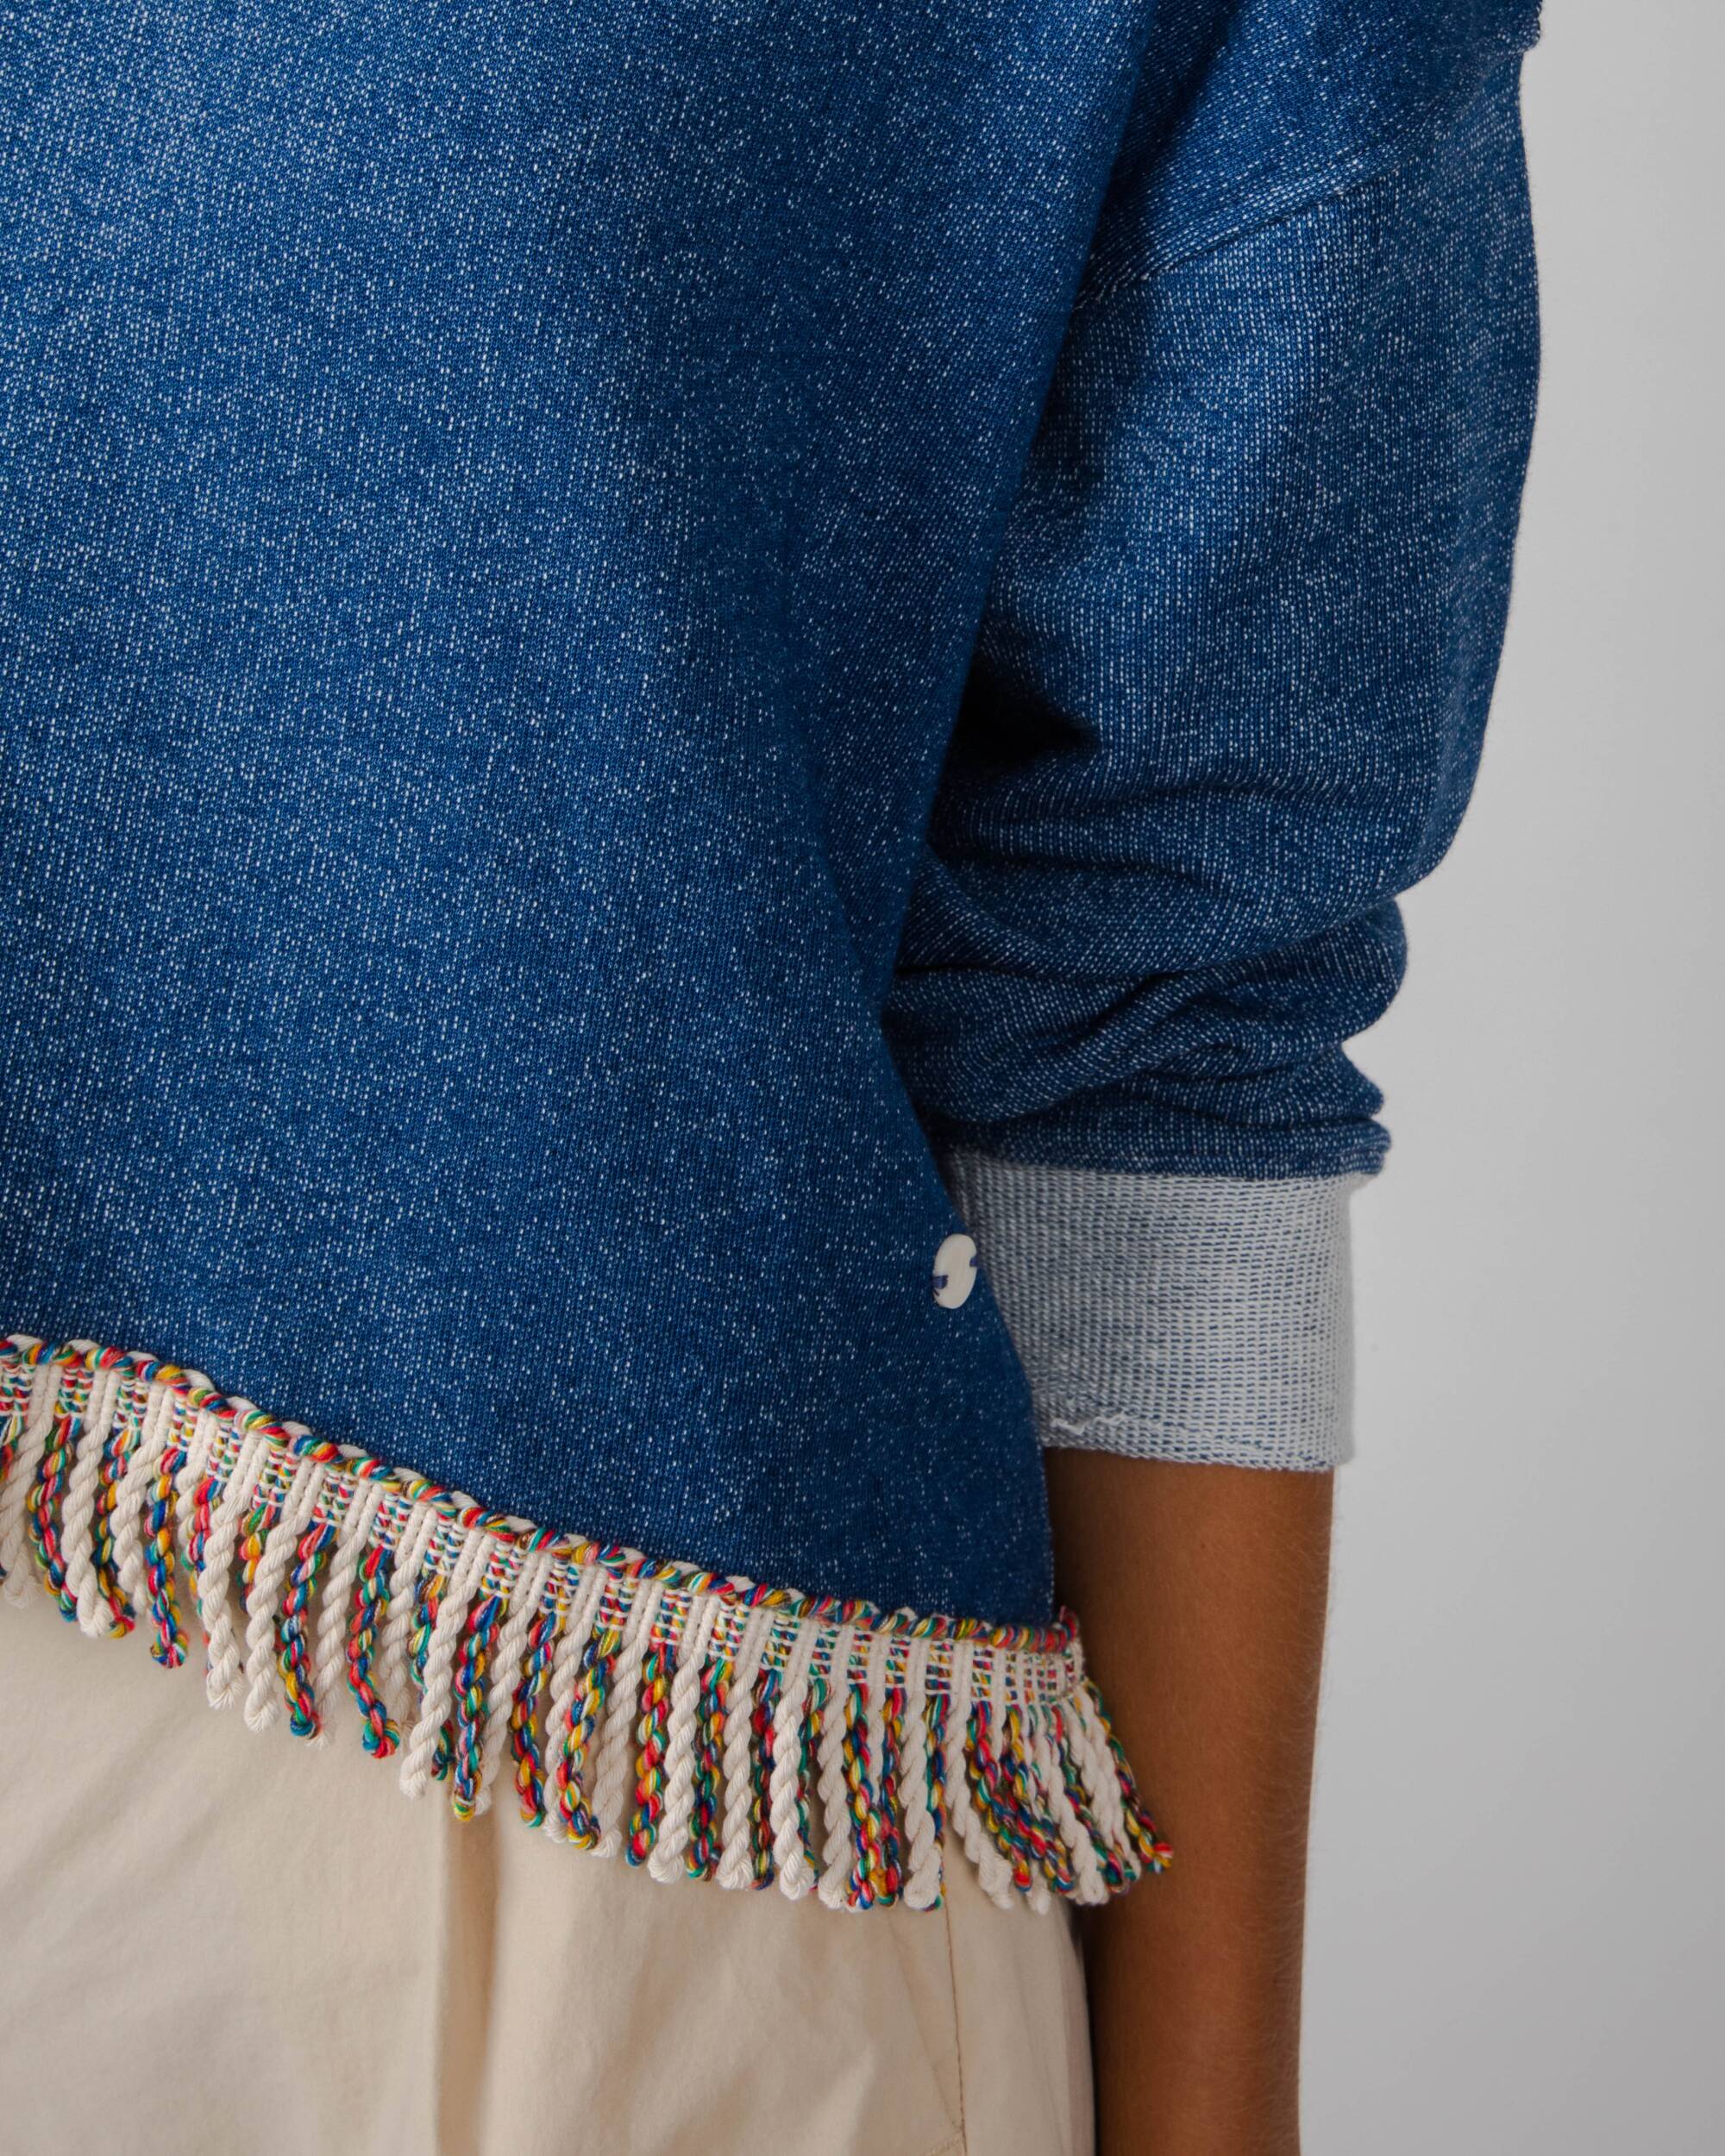 Blue cotton sweater from Brava Fabrics